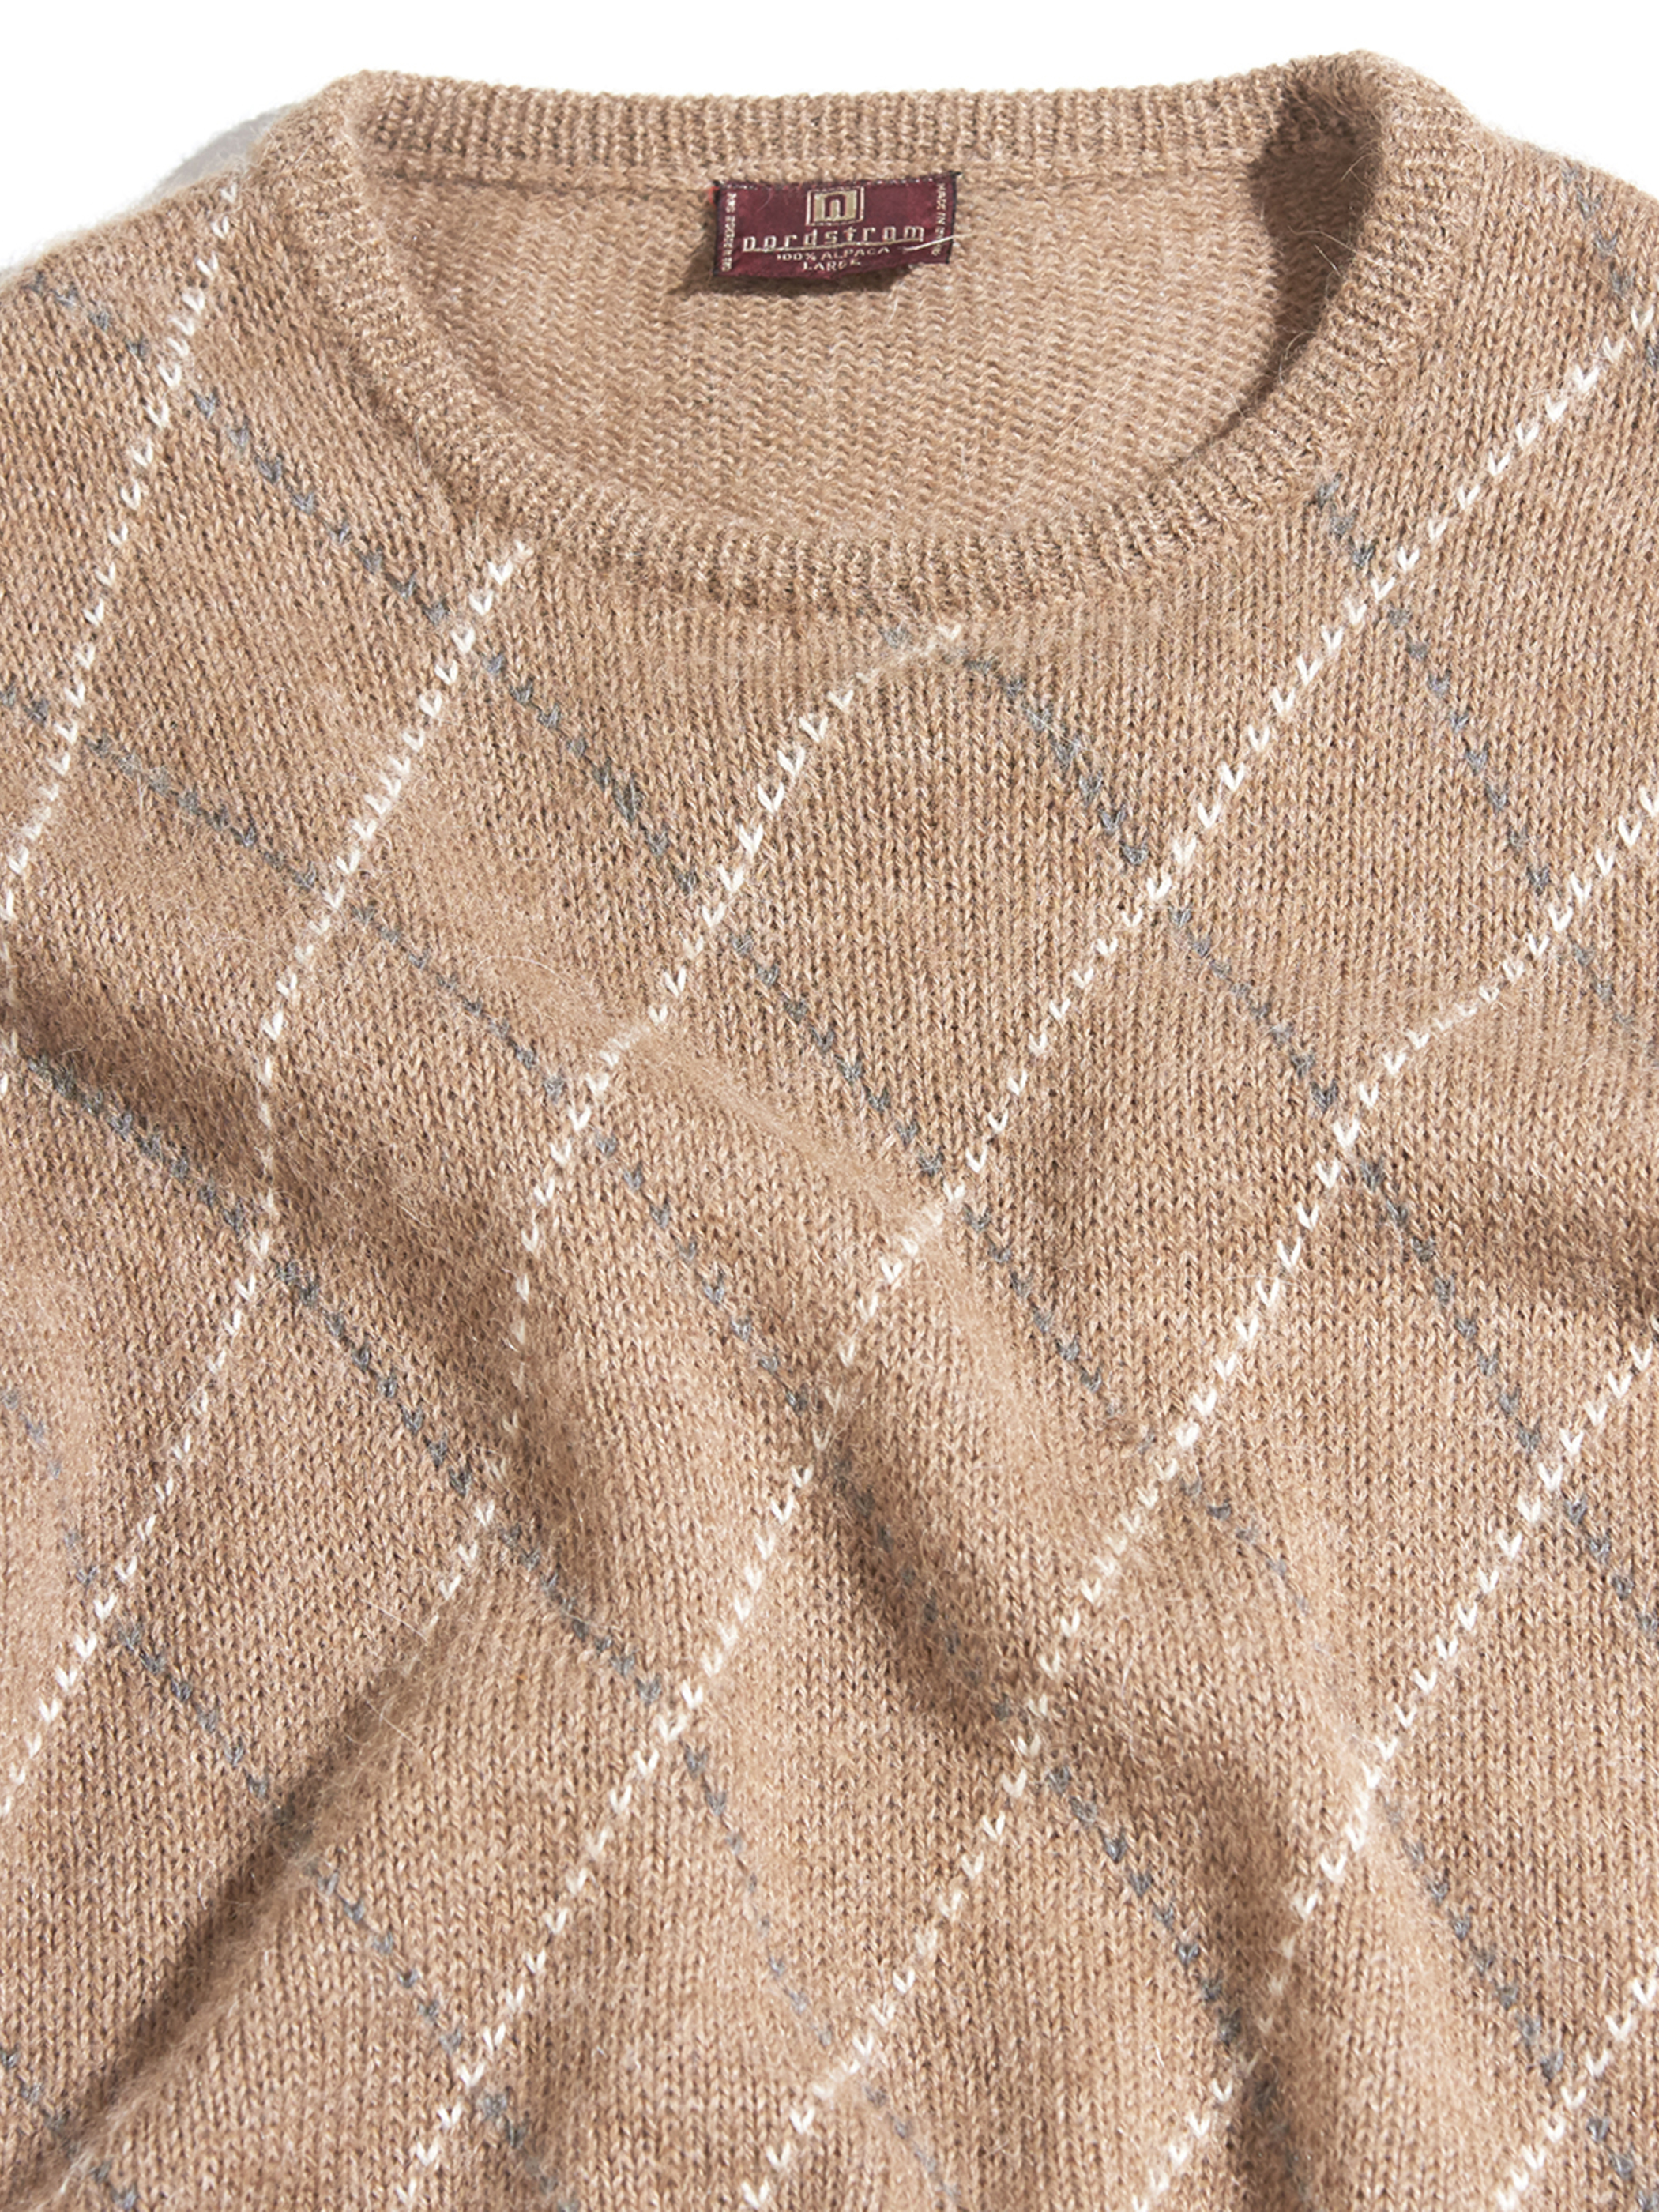 1980s "nordstrom" alpaca knit -BEIGE- <SALE¥9000→¥7000>